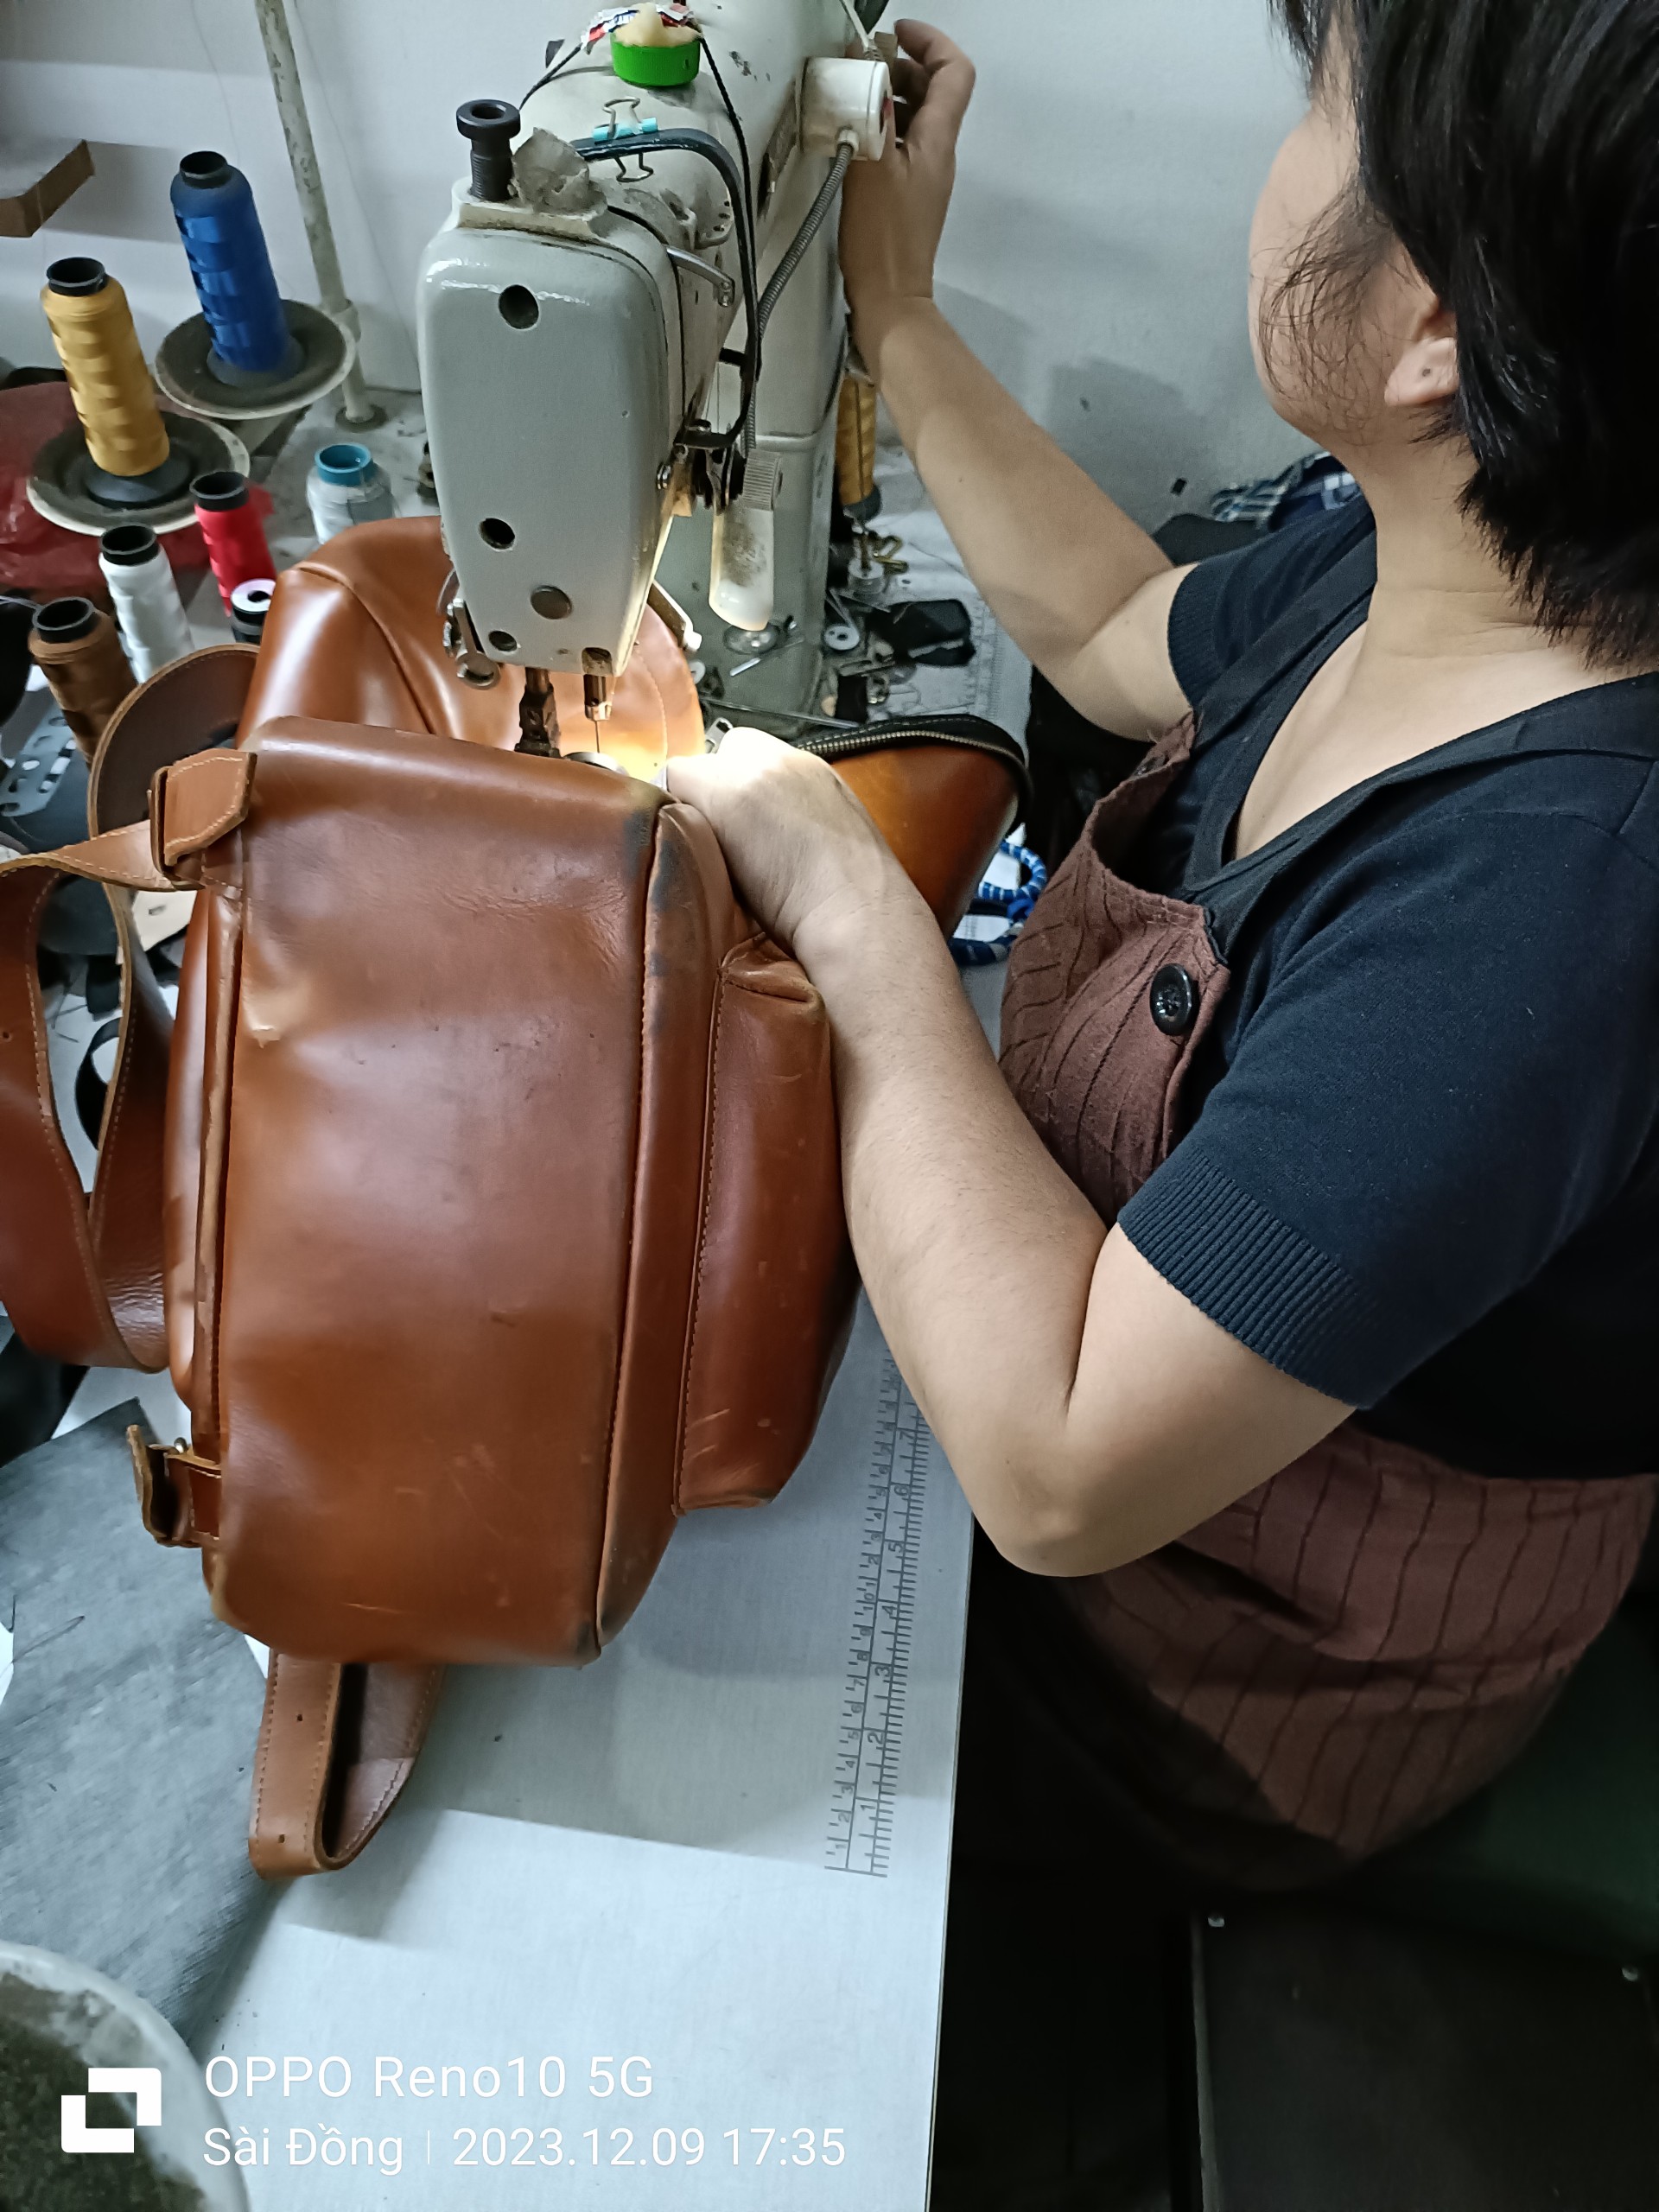 Leather item repair